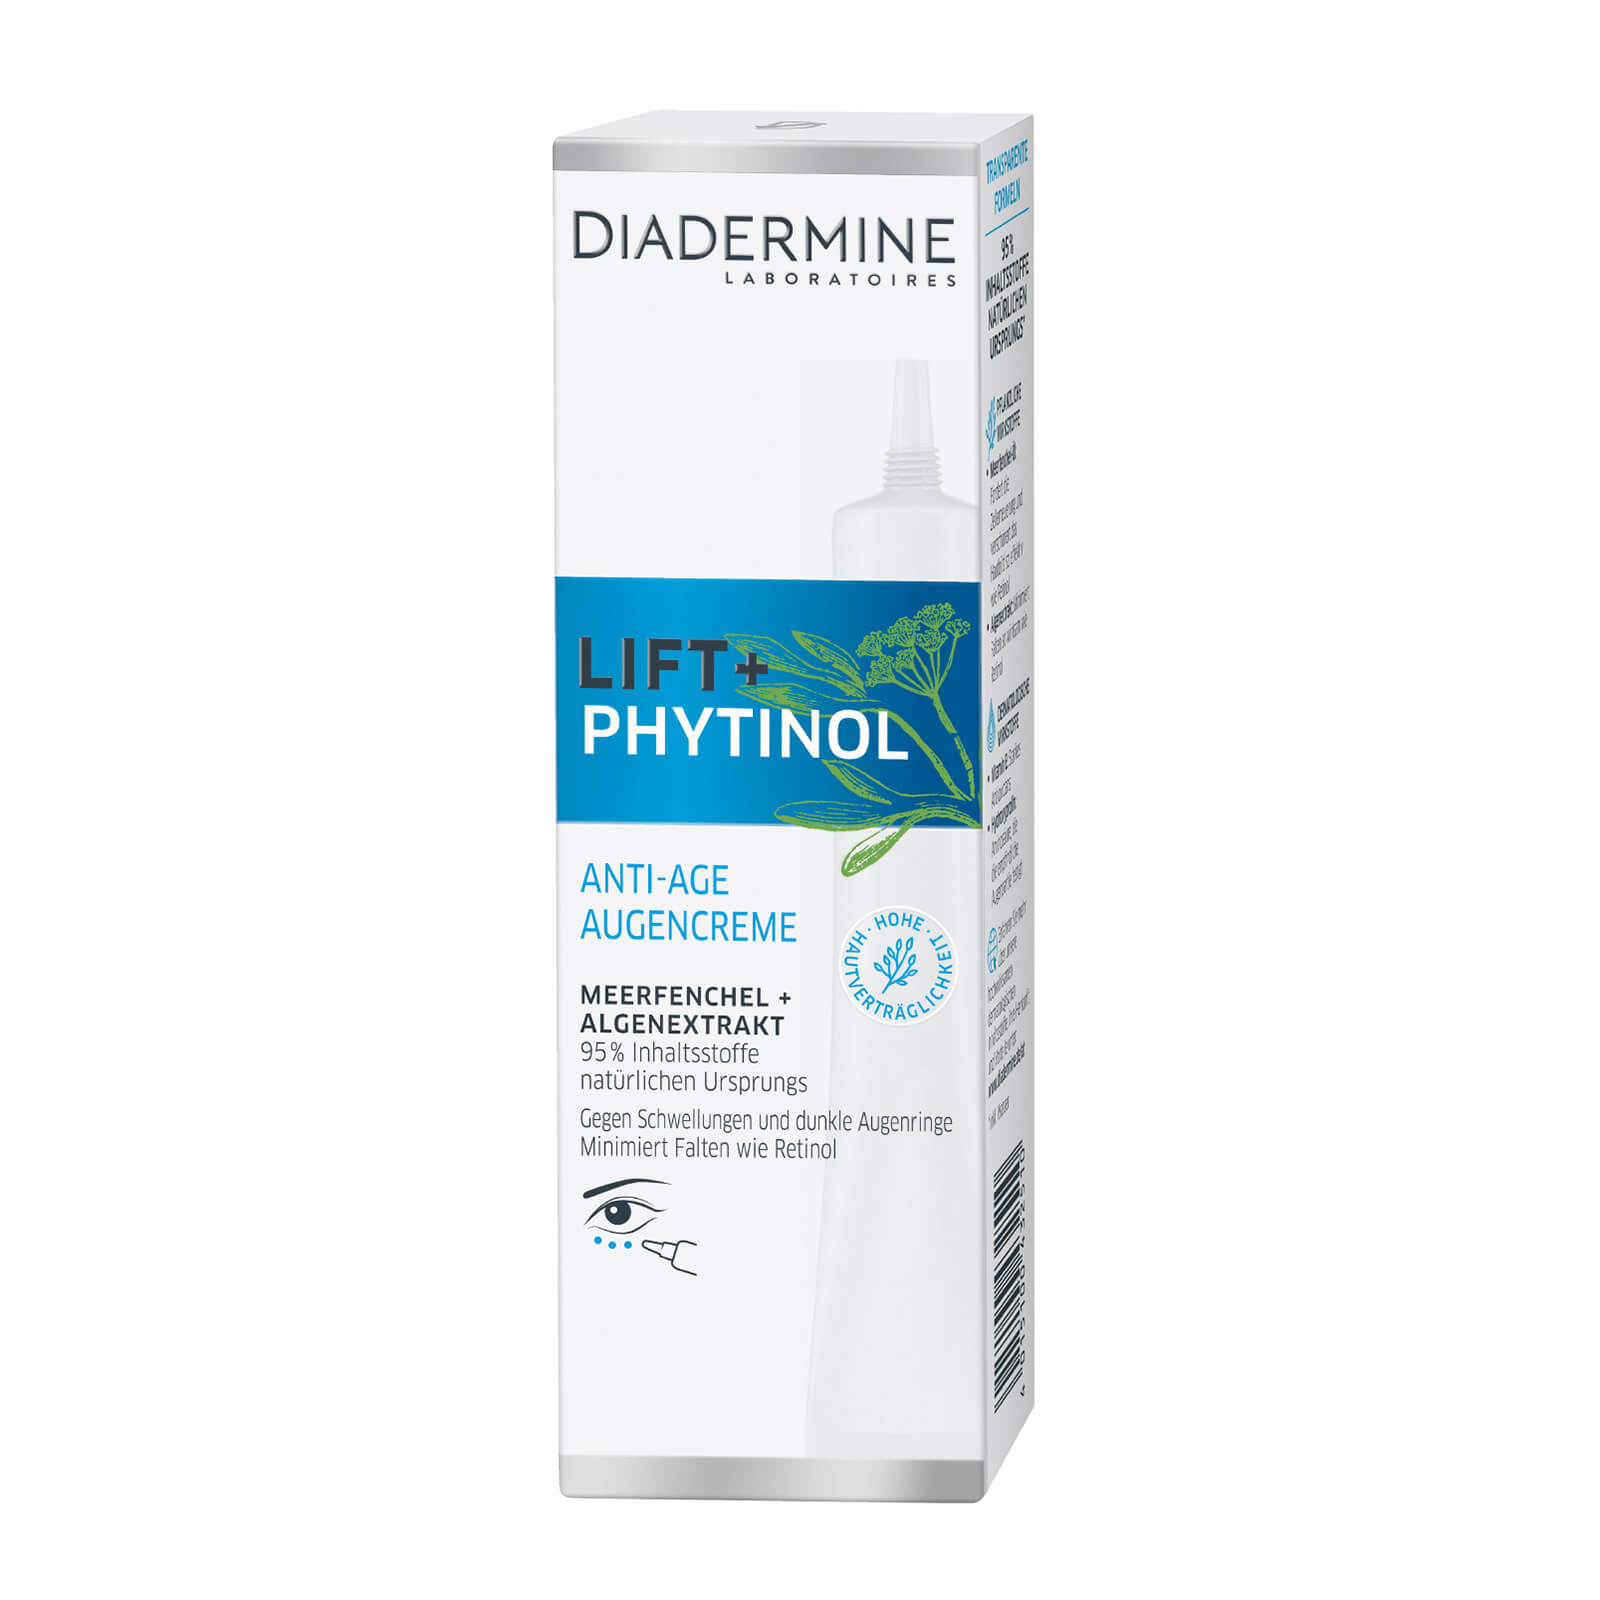 Diadermine Lift+ Phytinol Anti-Age Augencreme - New Formula